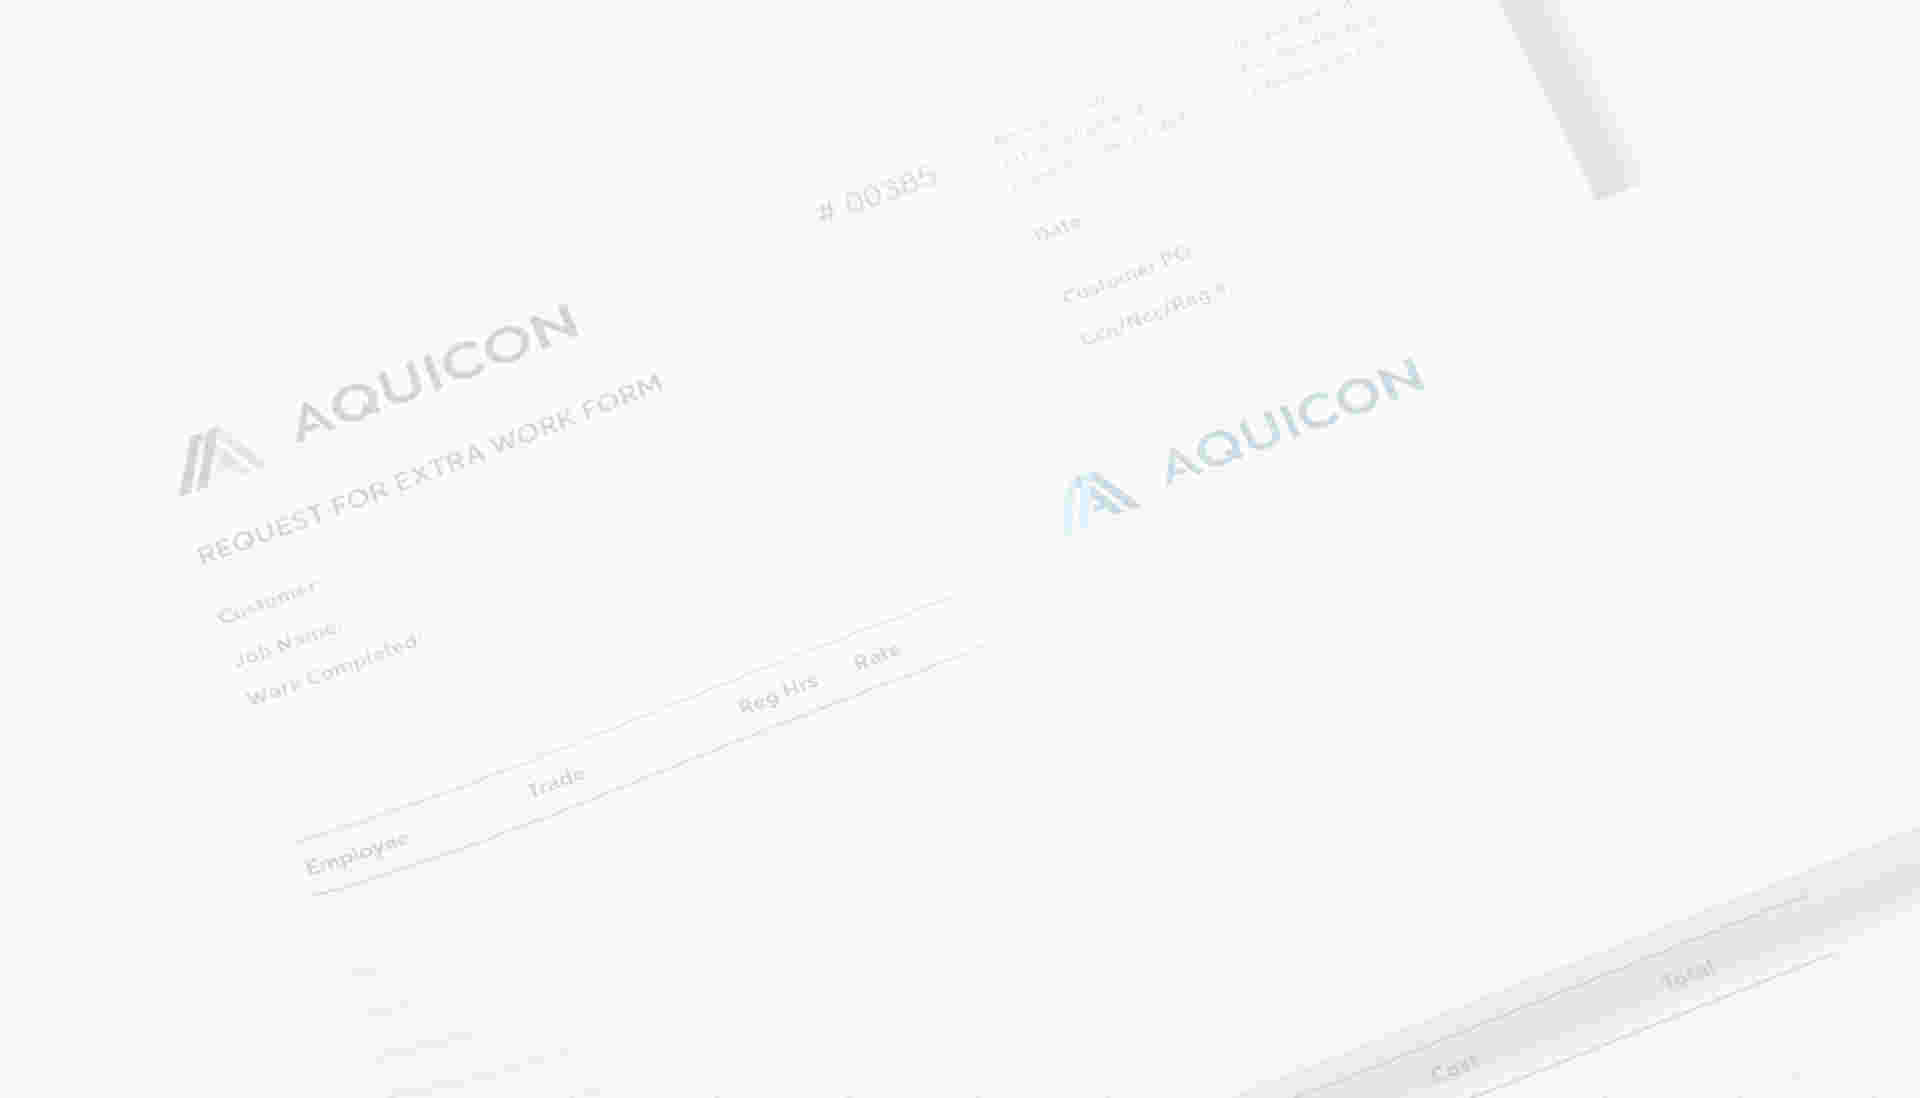 Aquicon - Aquicon_client_projects_8col_statioenry-1